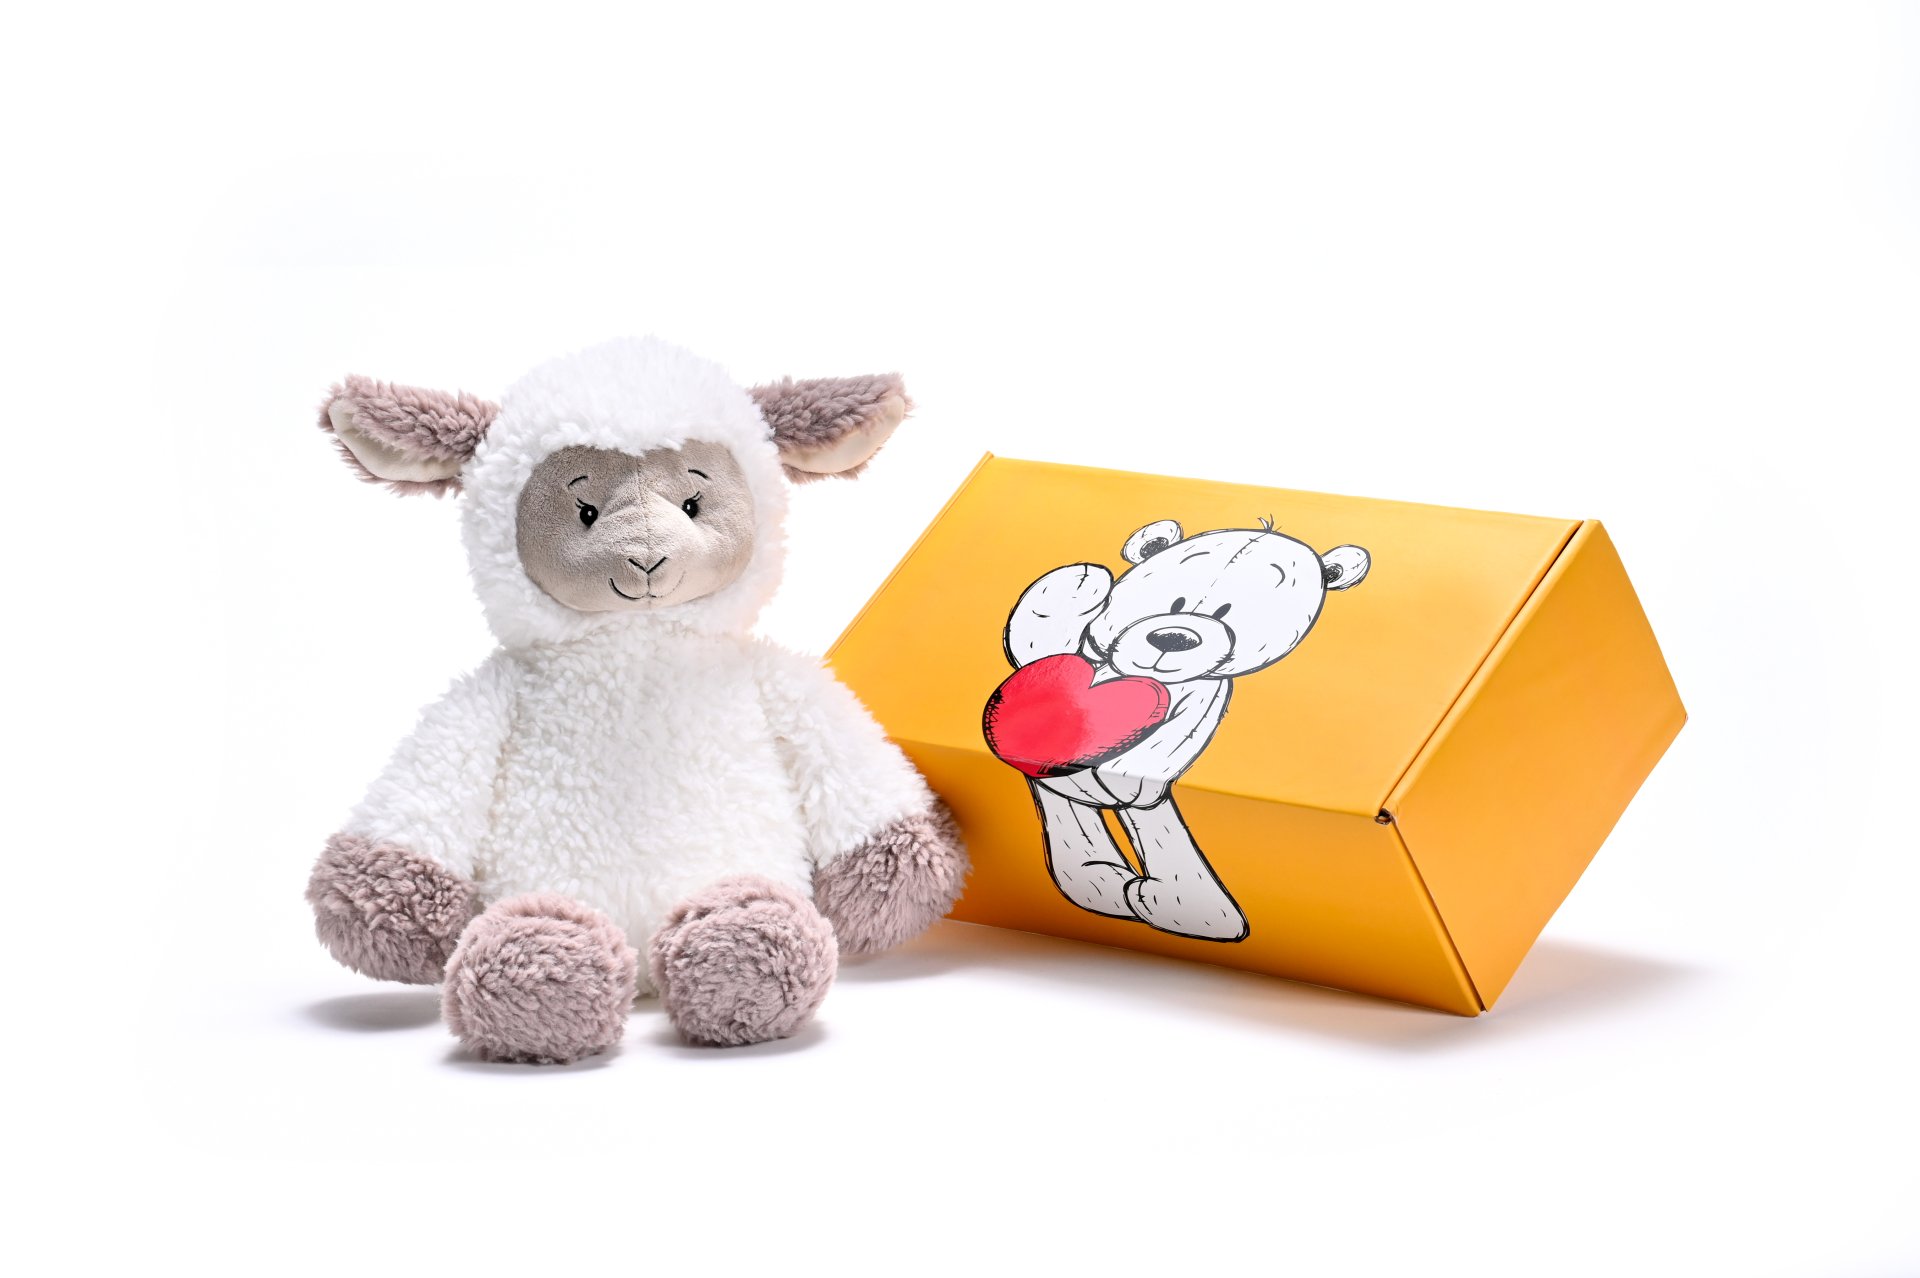 a stuffed sheep soft toy next to a box